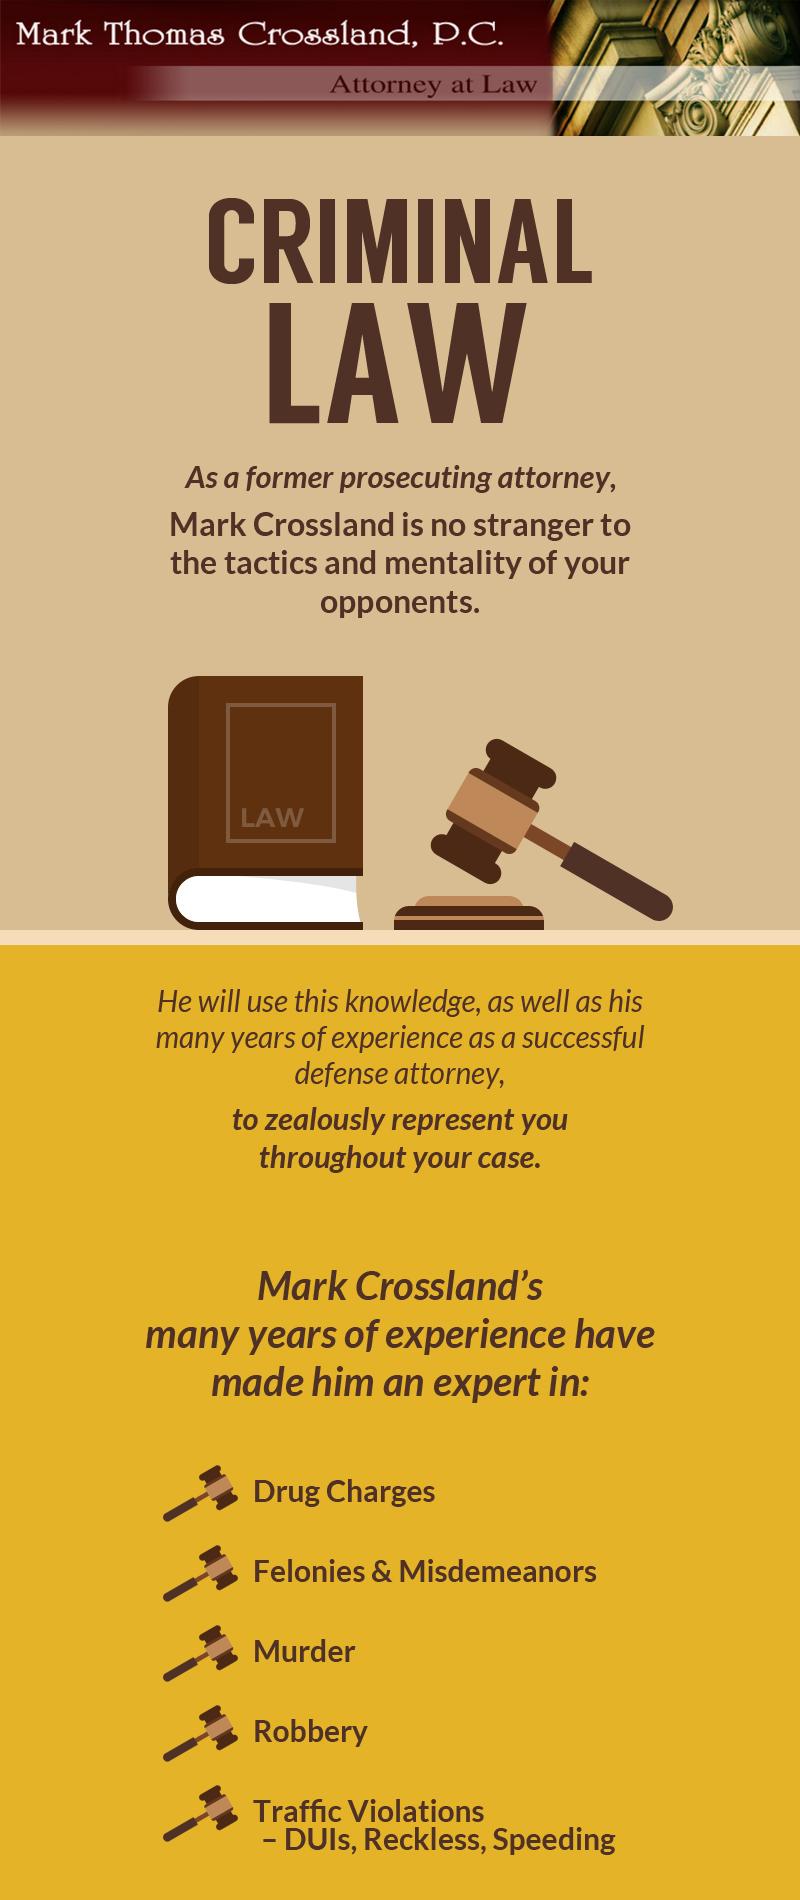 Mark Thomas Crossland – A Successful Criminal Attorney in Prince William County